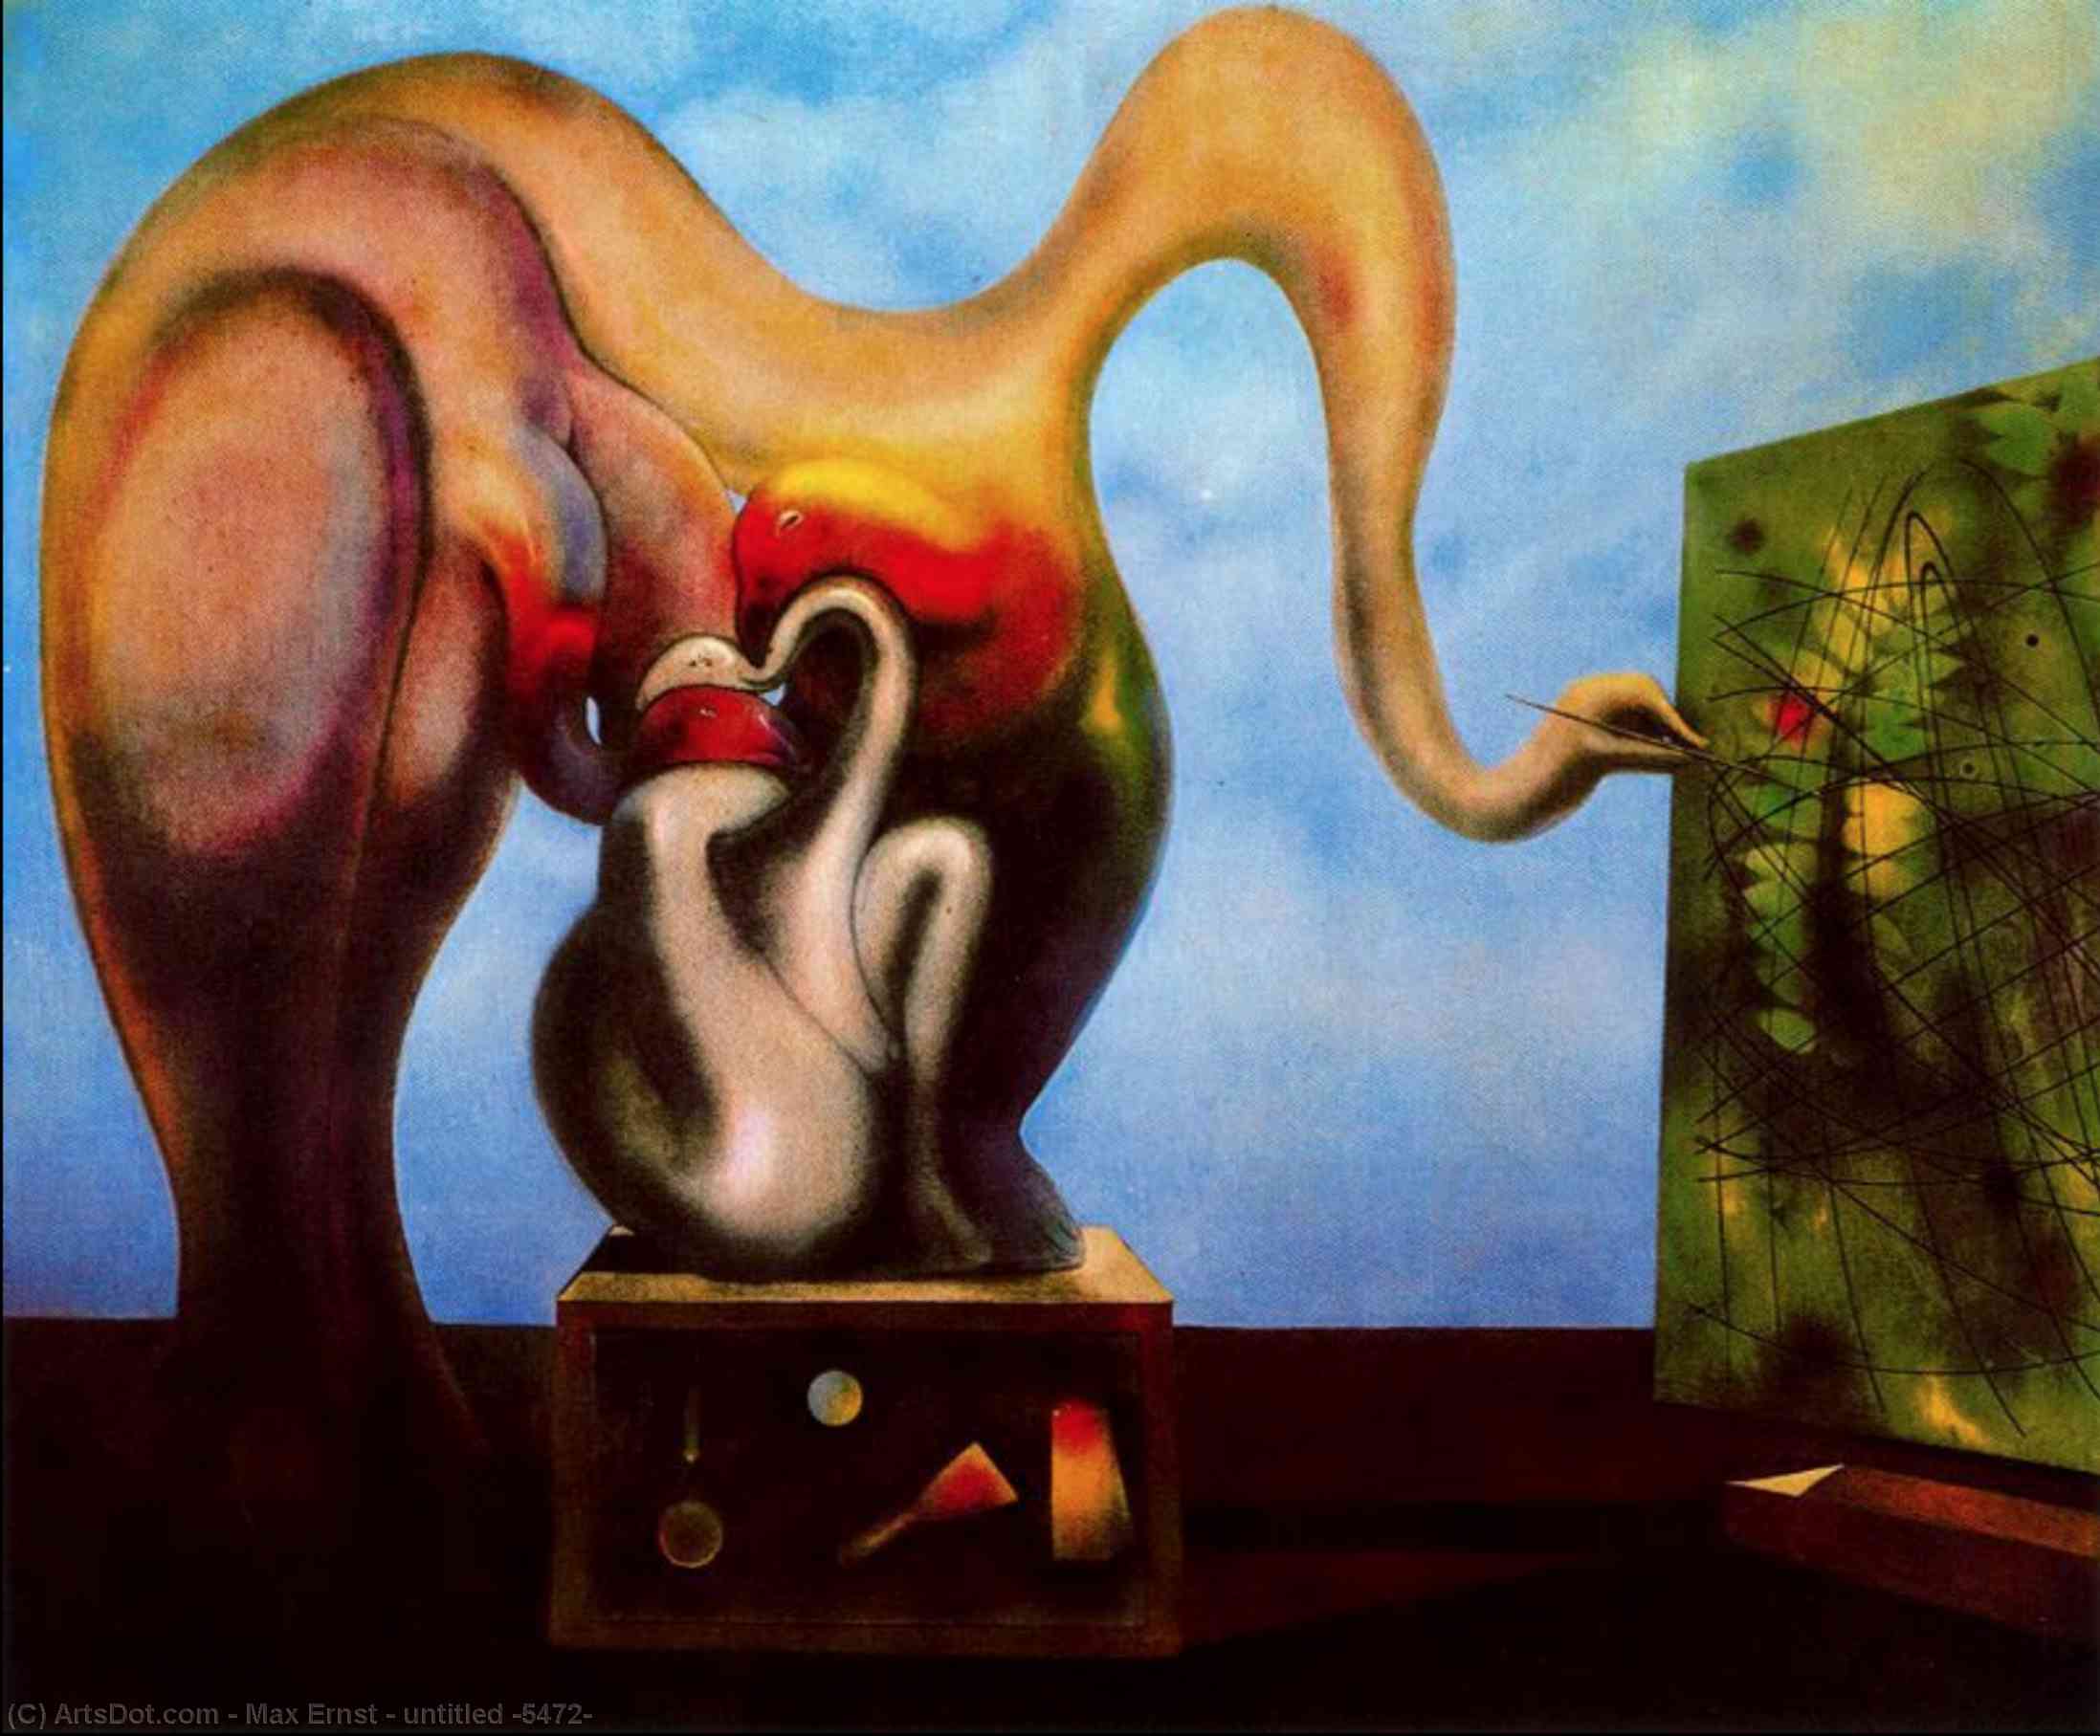 Wikoo.org - موسوعة الفنون الجميلة - اللوحة، العمل الفني Max Ernst - untitled (5472)